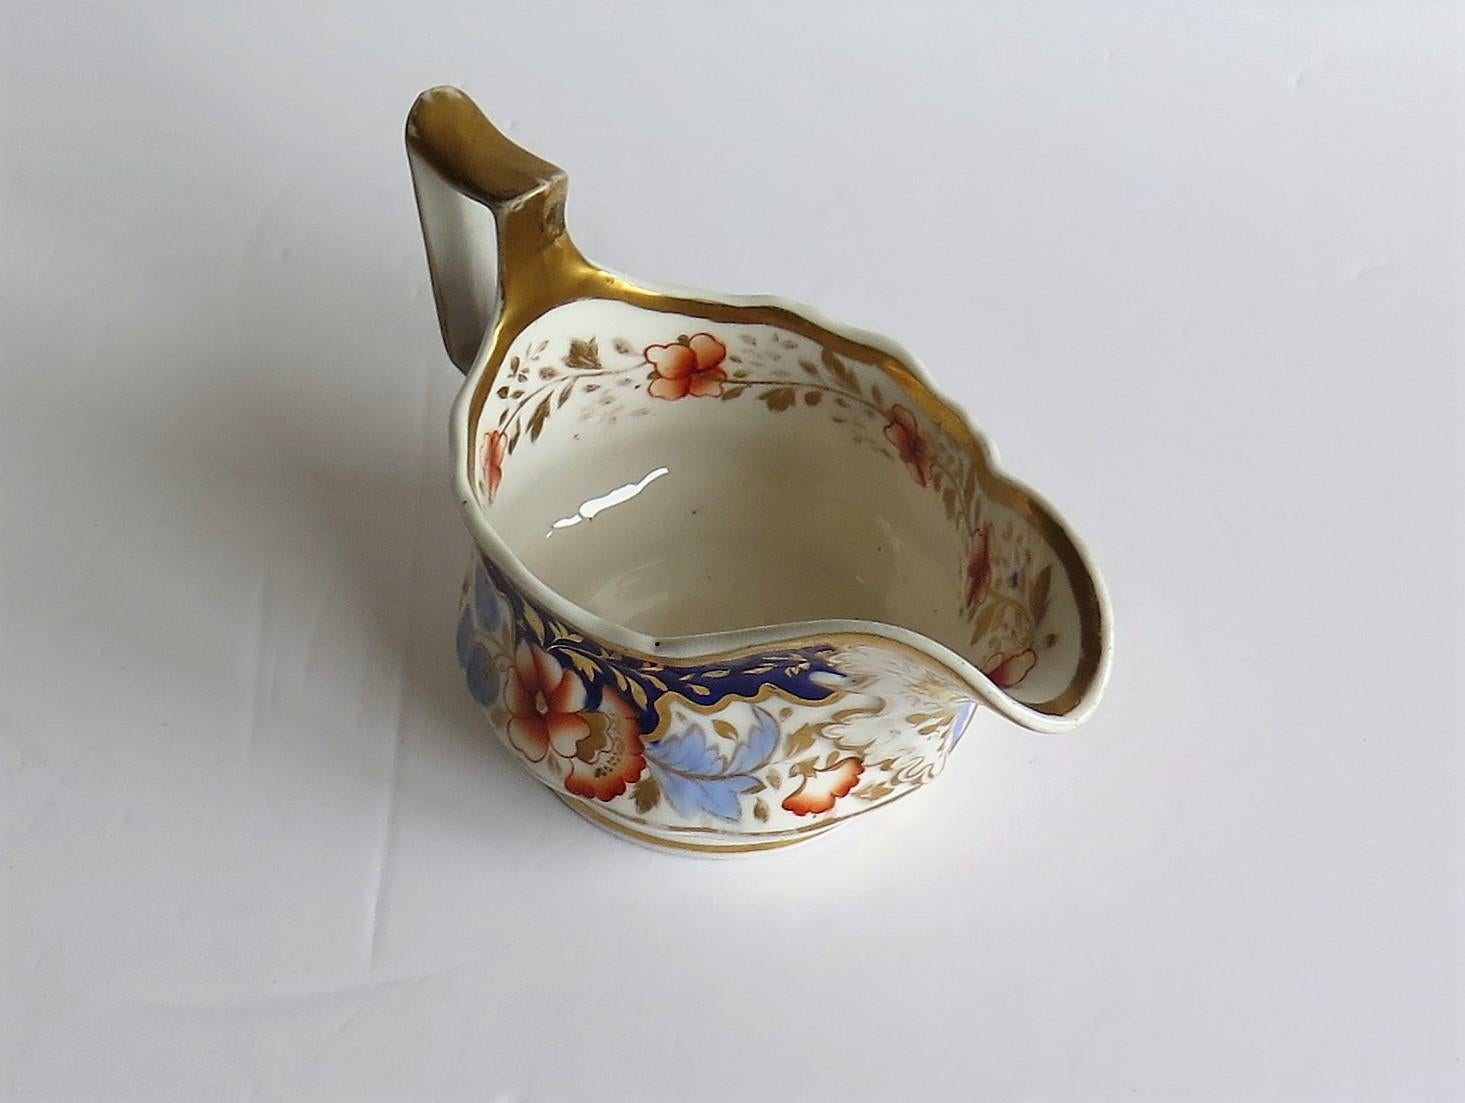 19th Century Ridgway Porcelain Milk Jug or Creamer Pattern 2/1005, Regency Period, circa 1825 For Sale